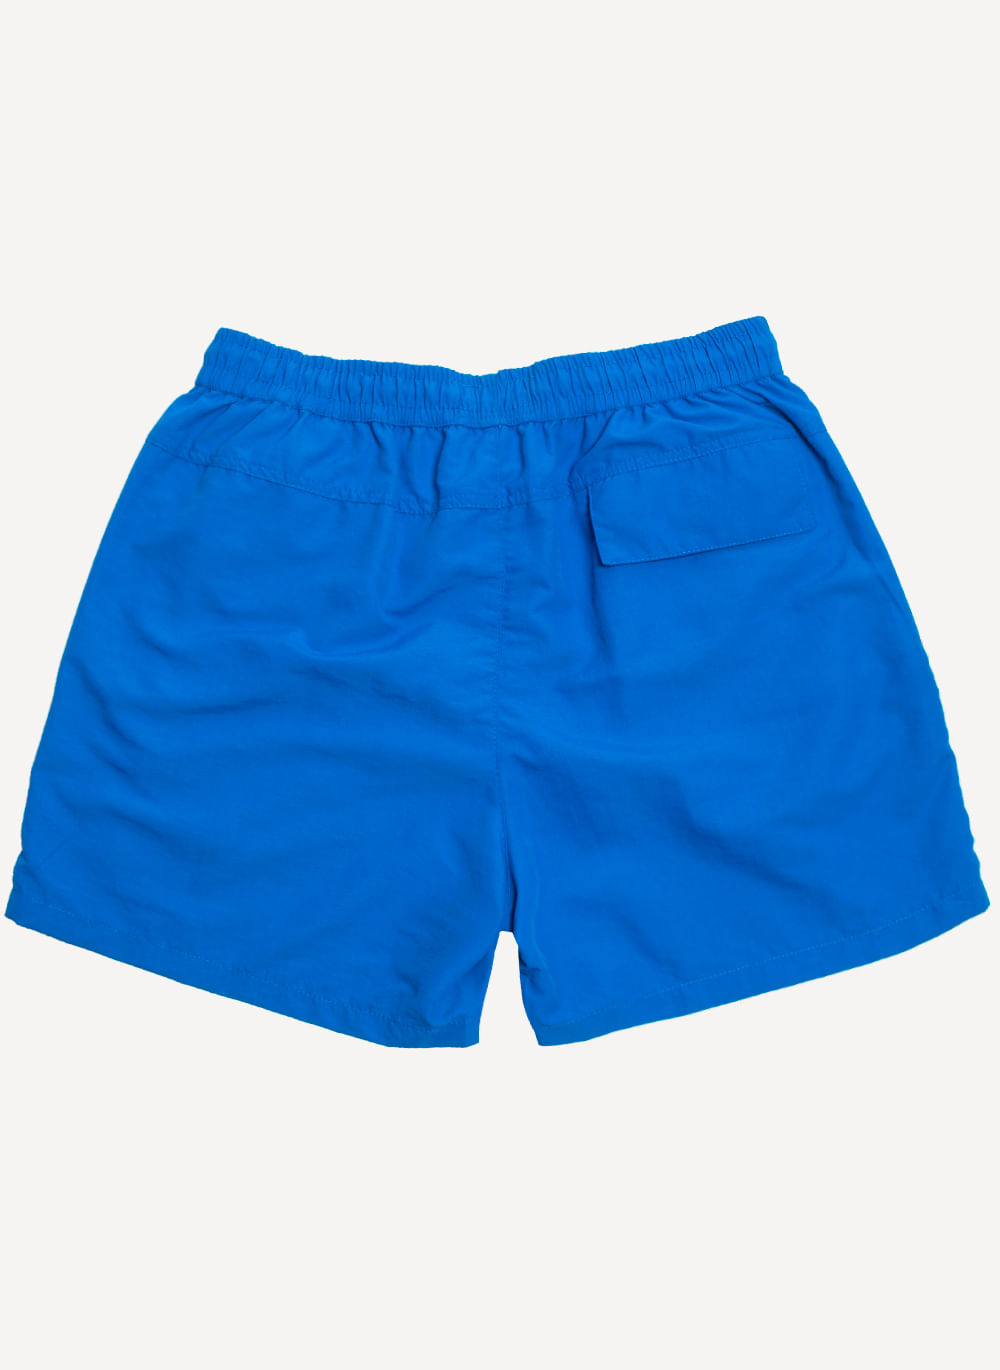 Shorts-Praia-Aleatory-Taslon-Fun-Azul-Azul-P